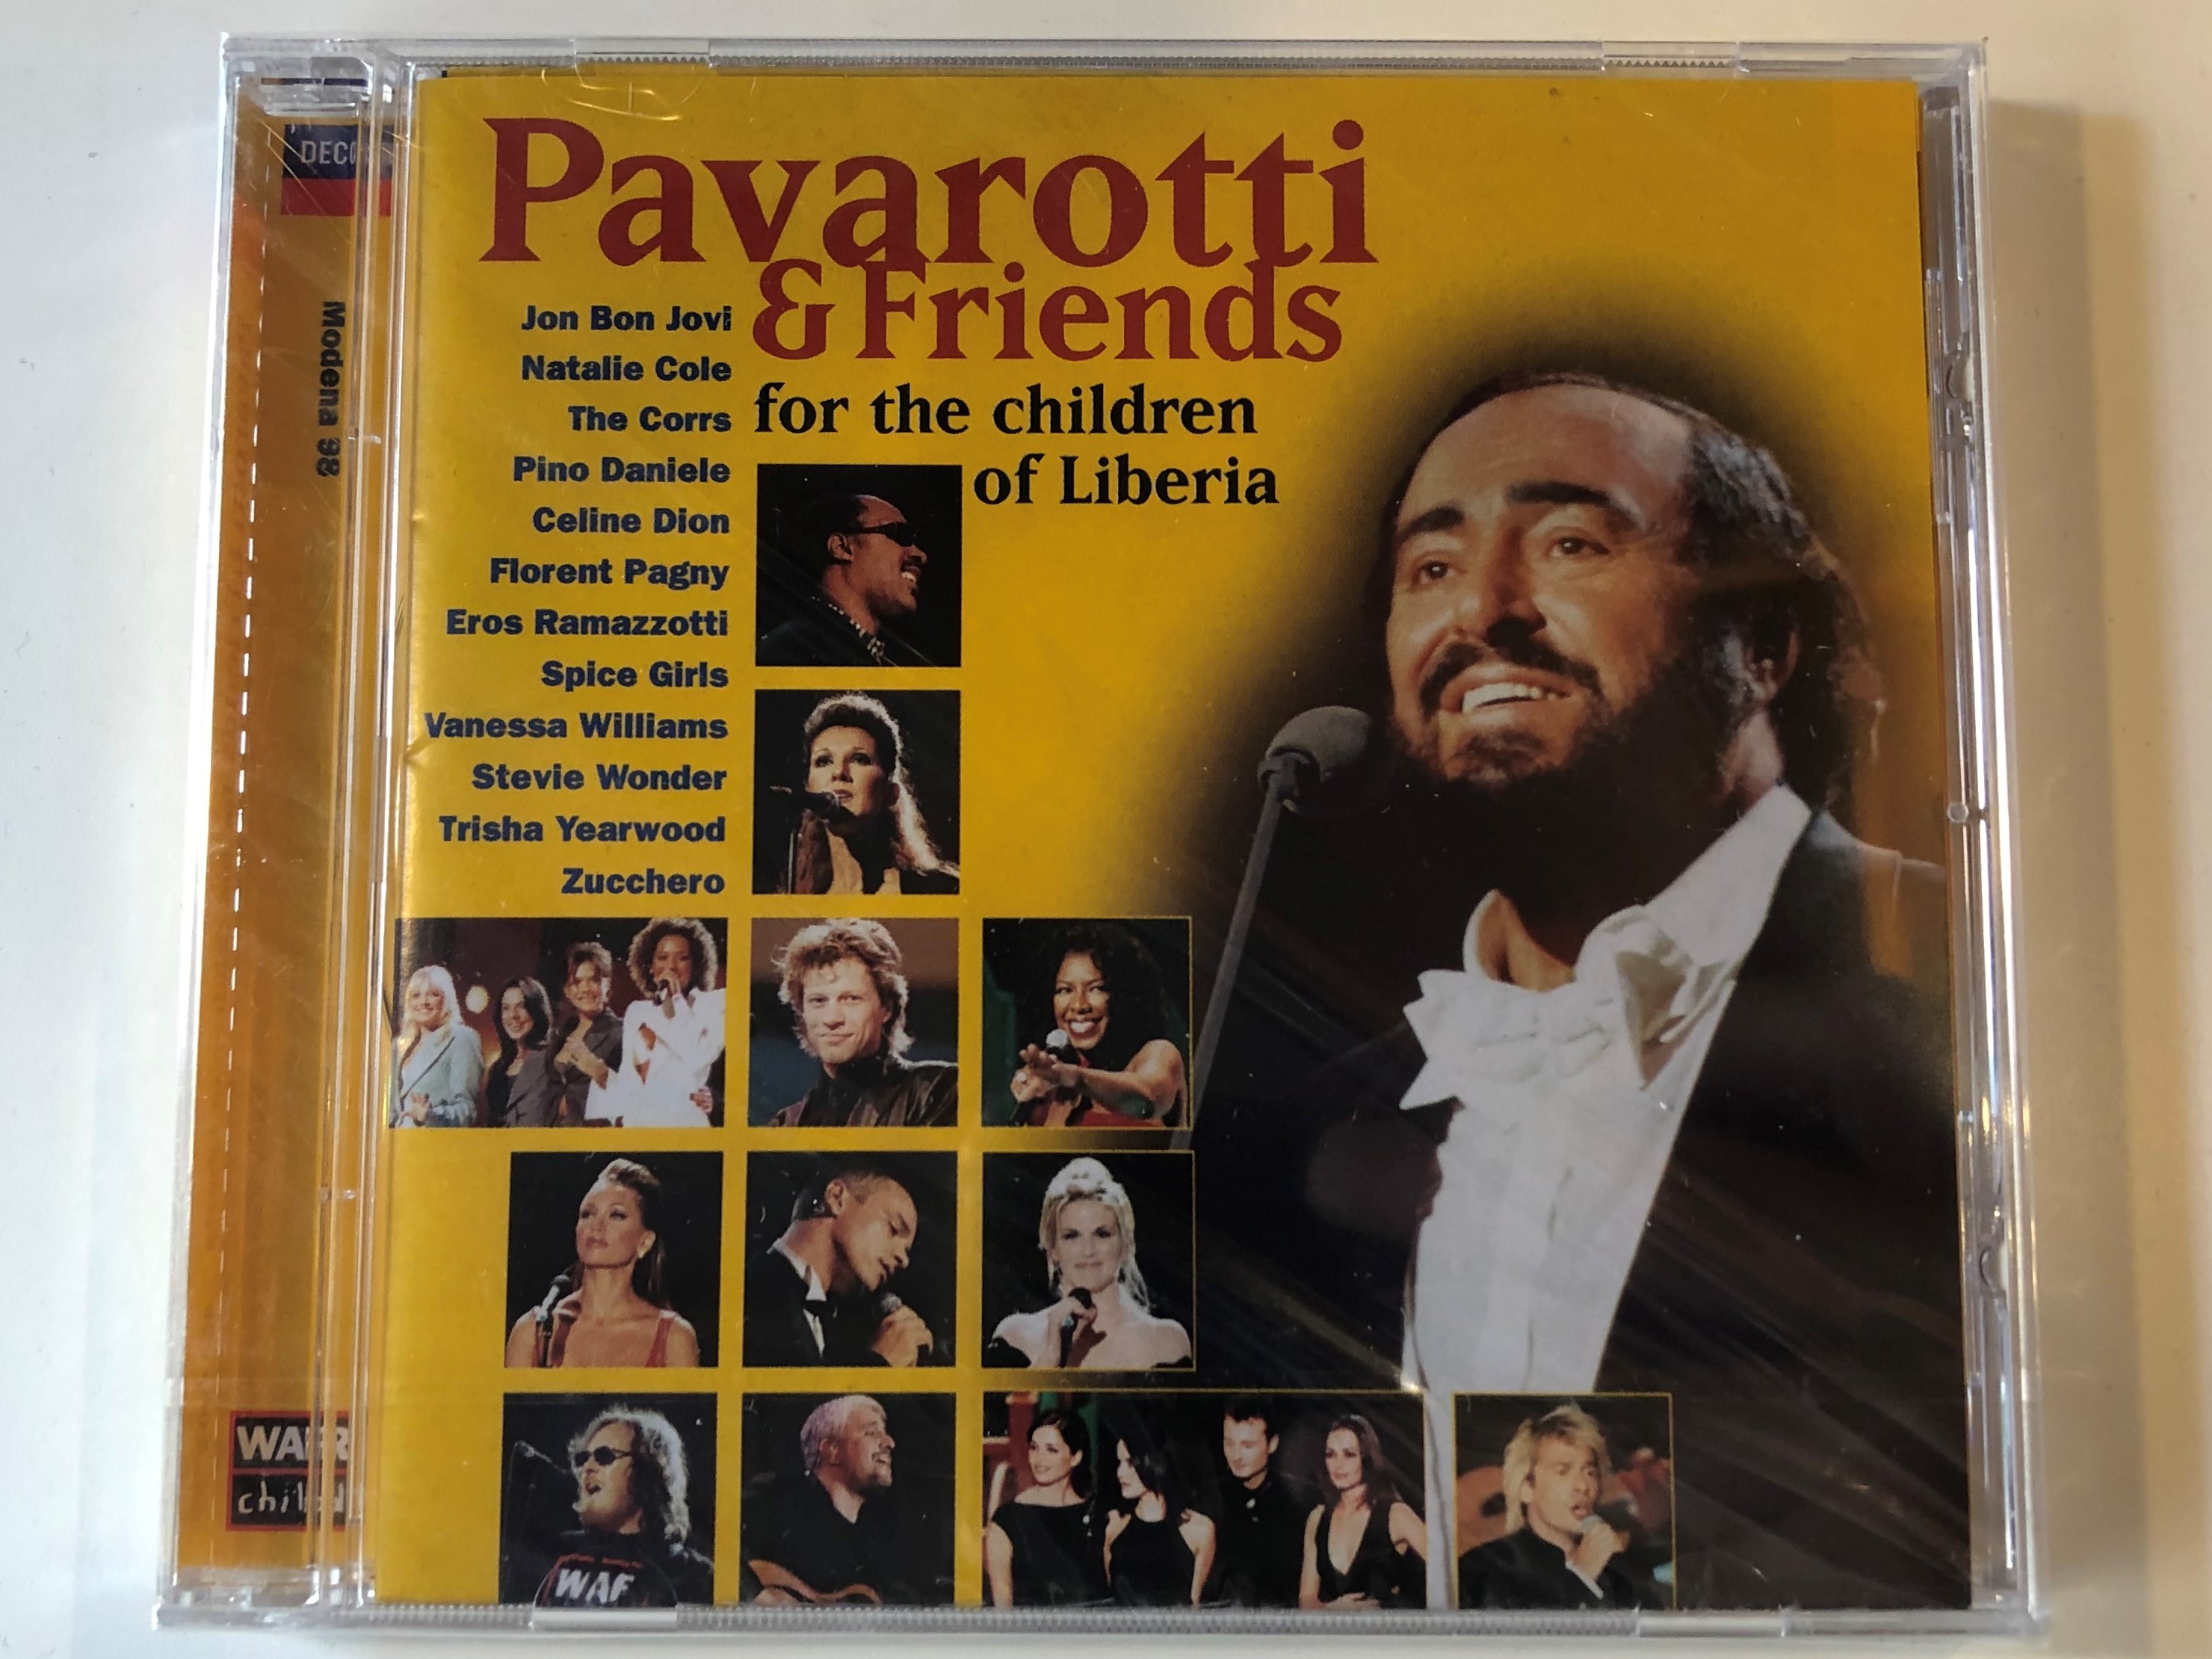 pavarotti-friends-for-the-children-of-liberia-jon-bon-jovi-natalie-cole-the-corrs-pino-daniele-celine-dion-florent-pagny-eros-ramazzotti-spice-girls-vanessa-williams-stevoie-wonder-t-1-.jpg